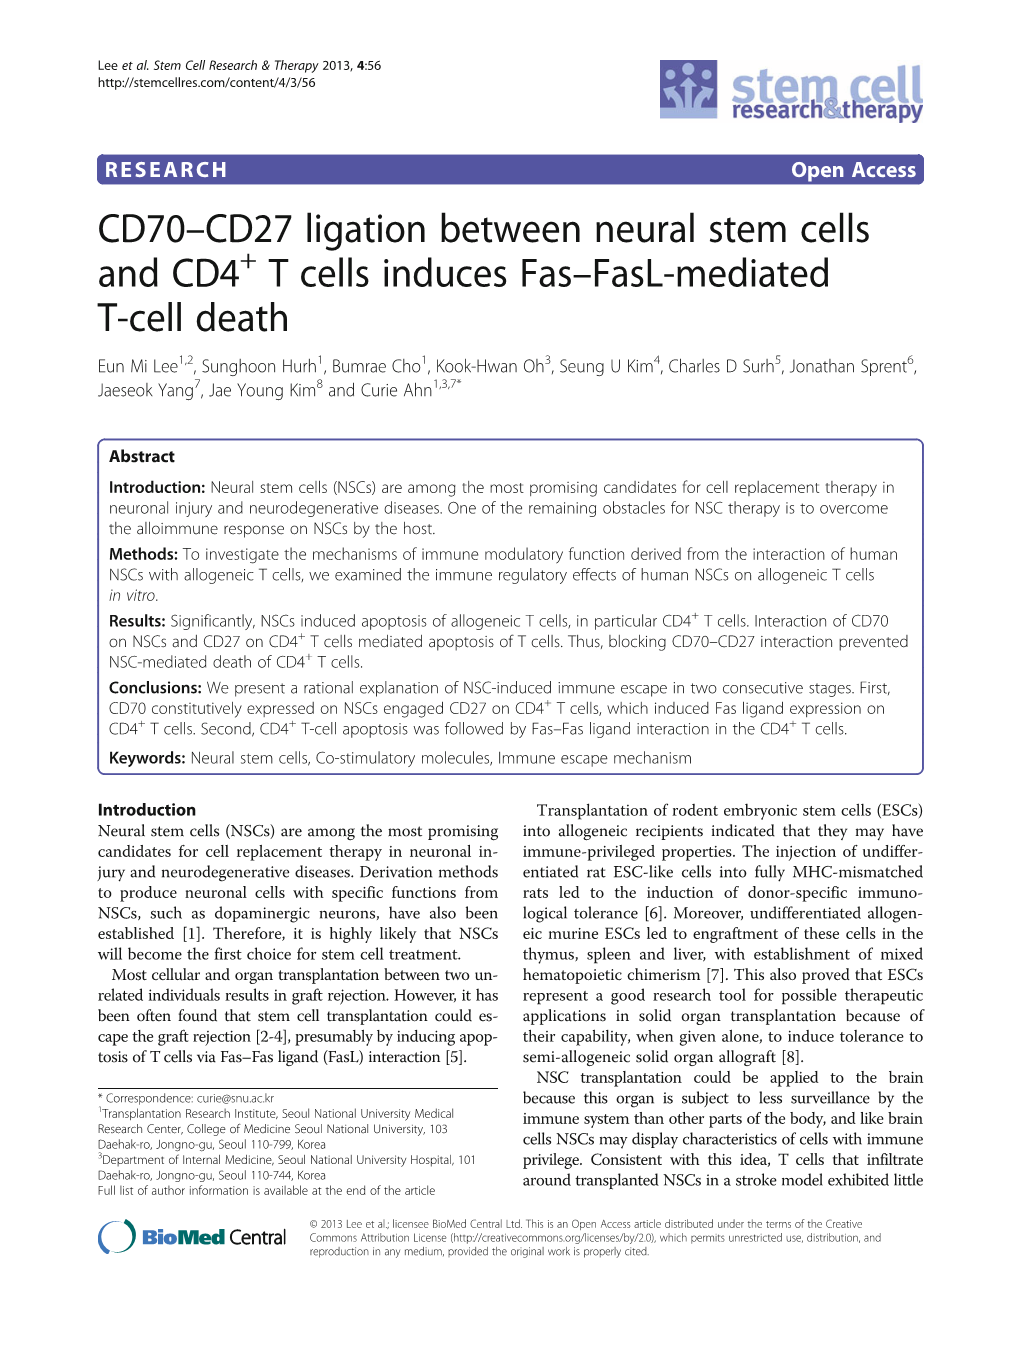 CD70-CD27 Ligation Between Neural Stem Cells and CD4 T Cells Induces